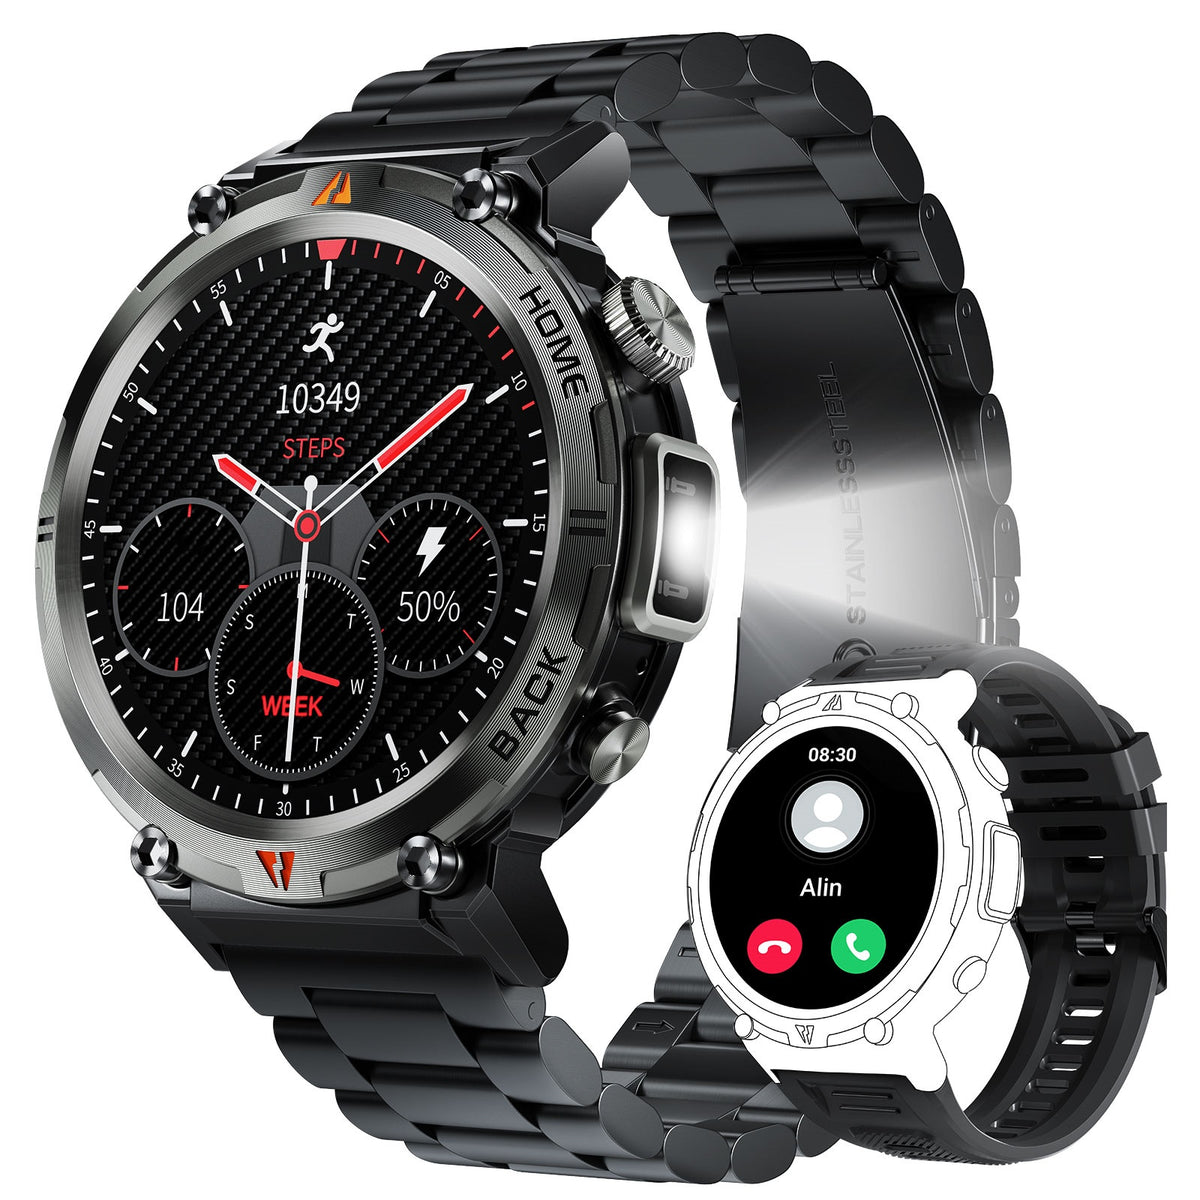 Eigiis Ke3 Outdoor Smartwatch Con Linterna + Brújula Militar